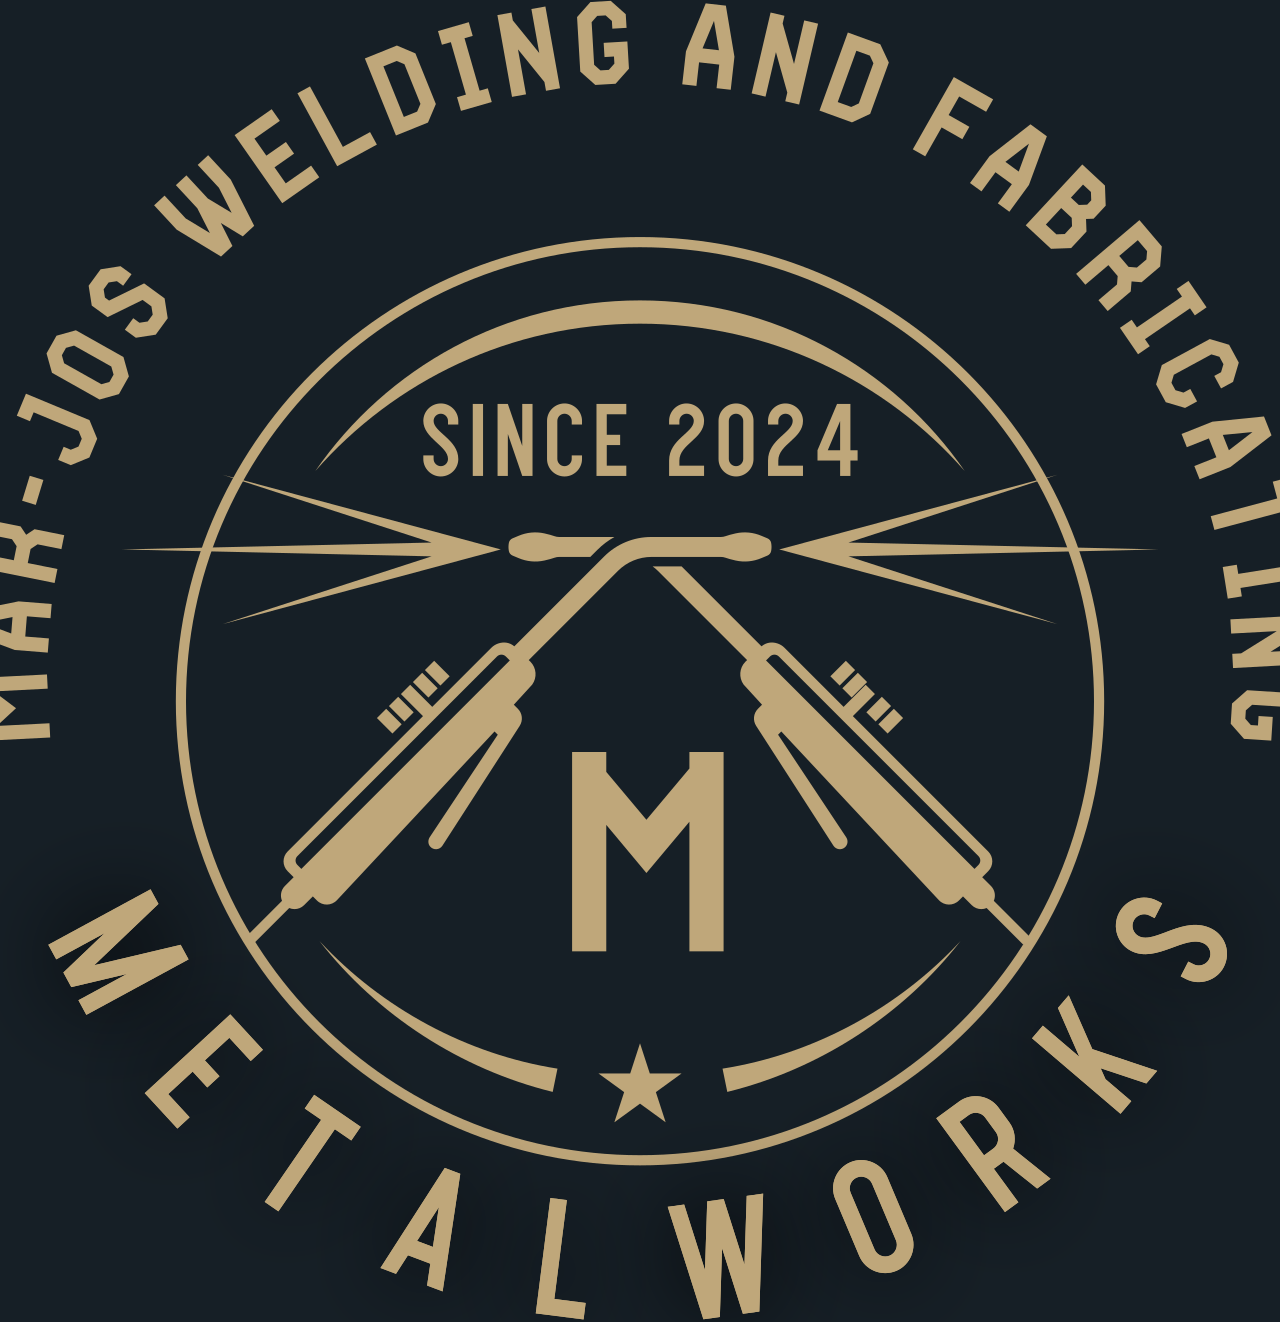 Mar-jos welding and fabricating's logo